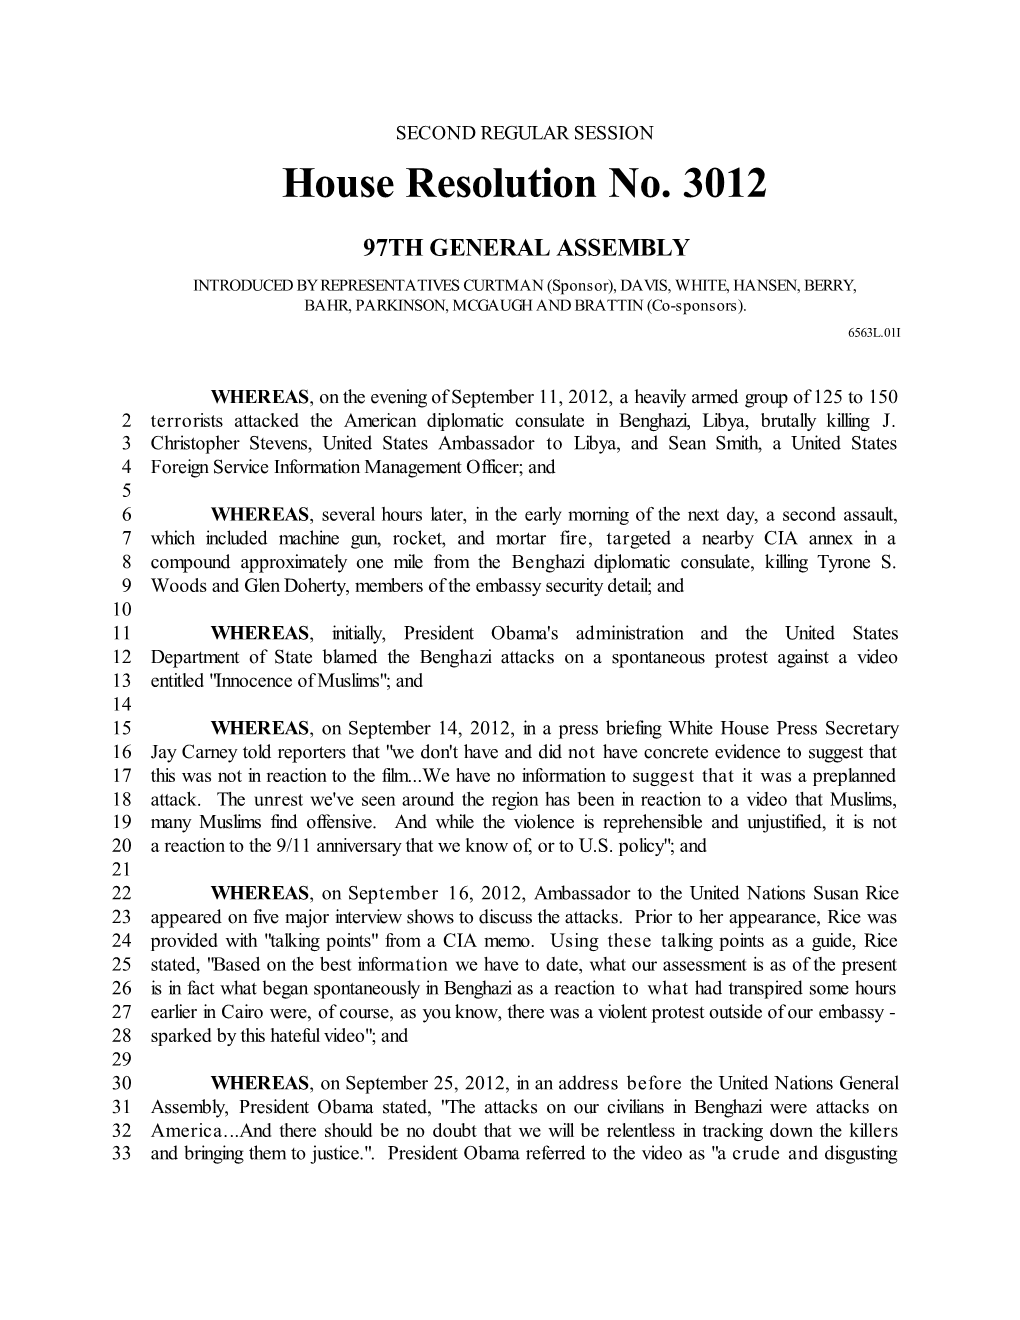 House Resolution No. 3012